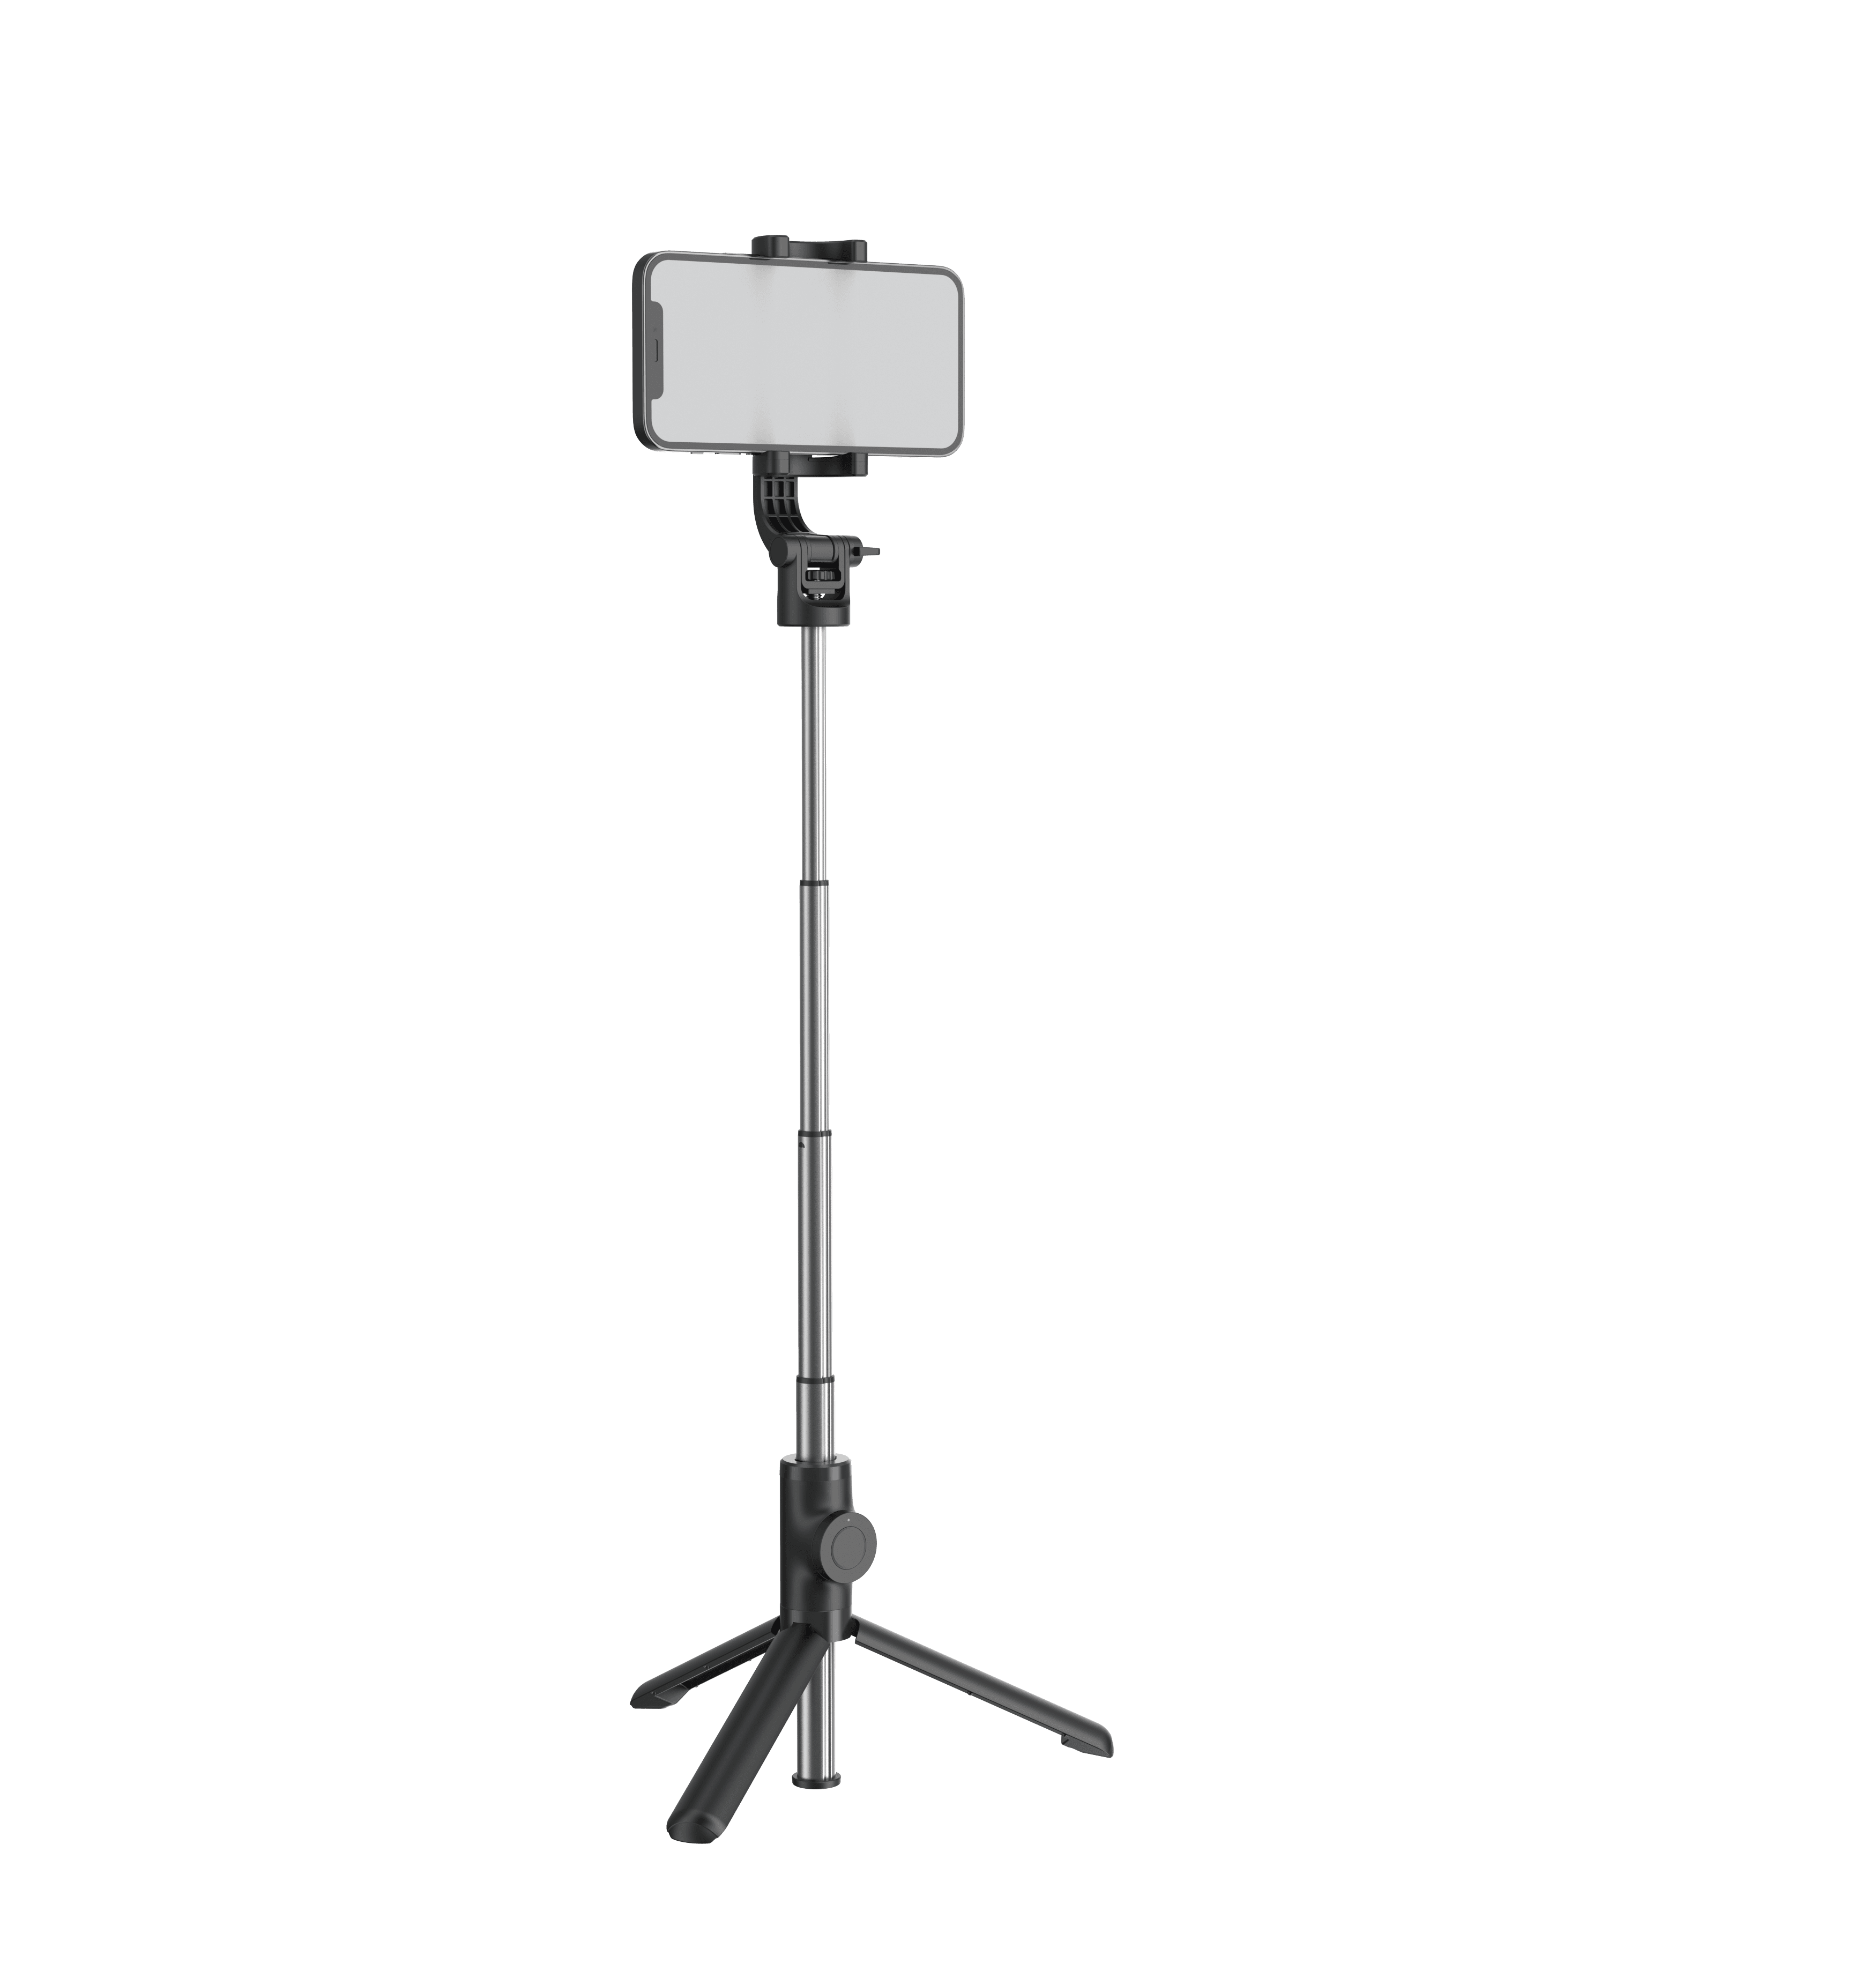 Swissten bluetoth selfie tyč - aluminium tripod pro